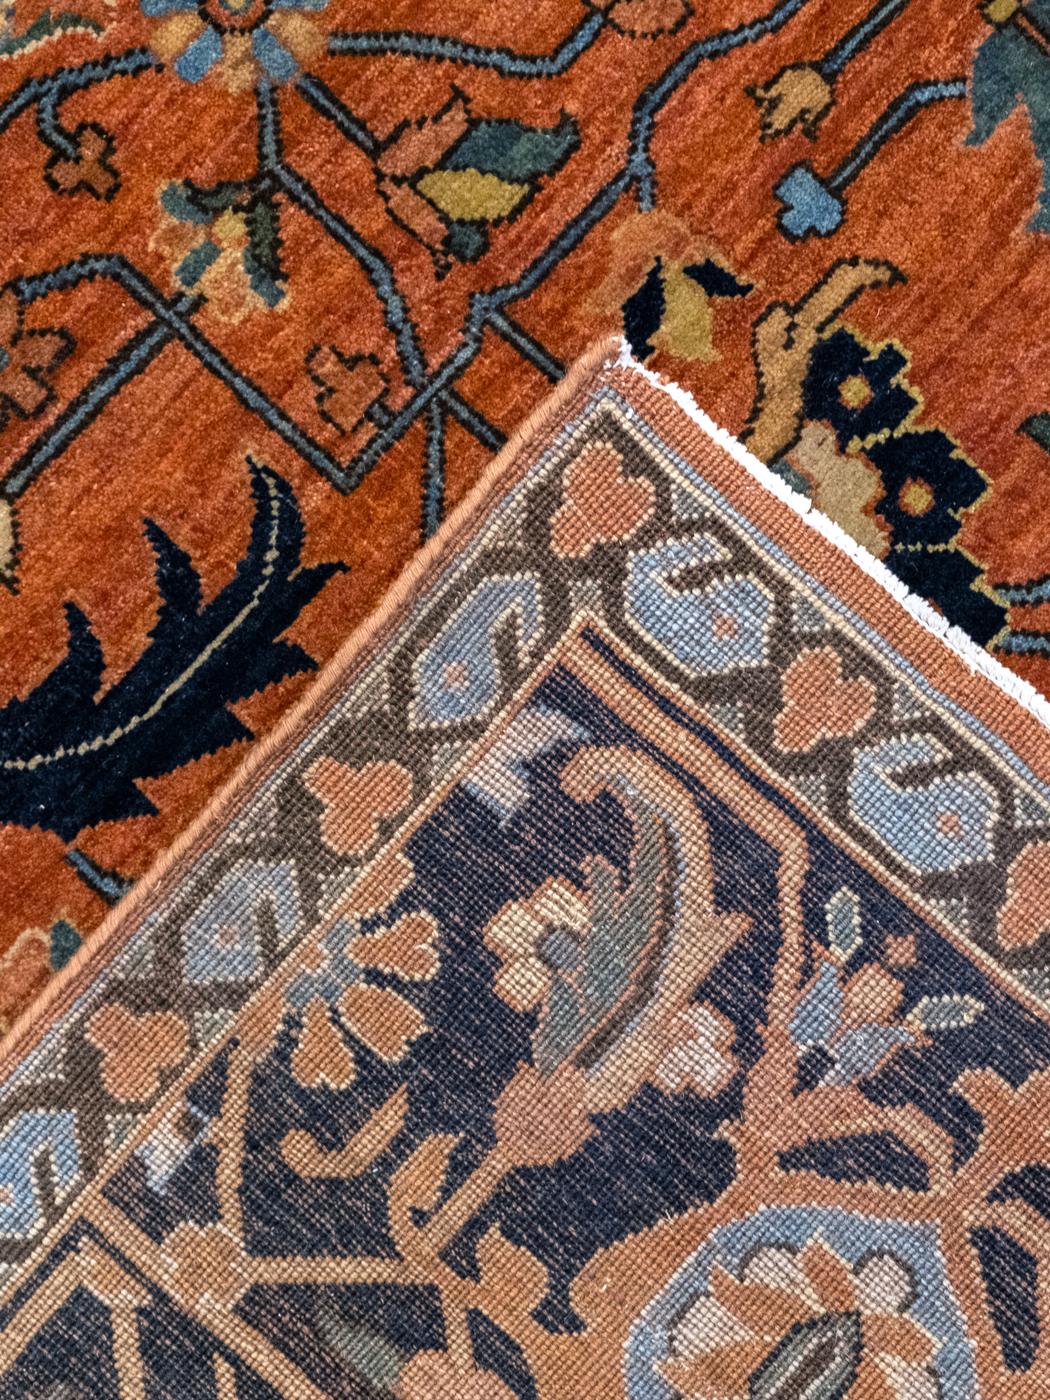 Wool Classic Persian Serapi Carpet in Orange, Indigo, and Blue